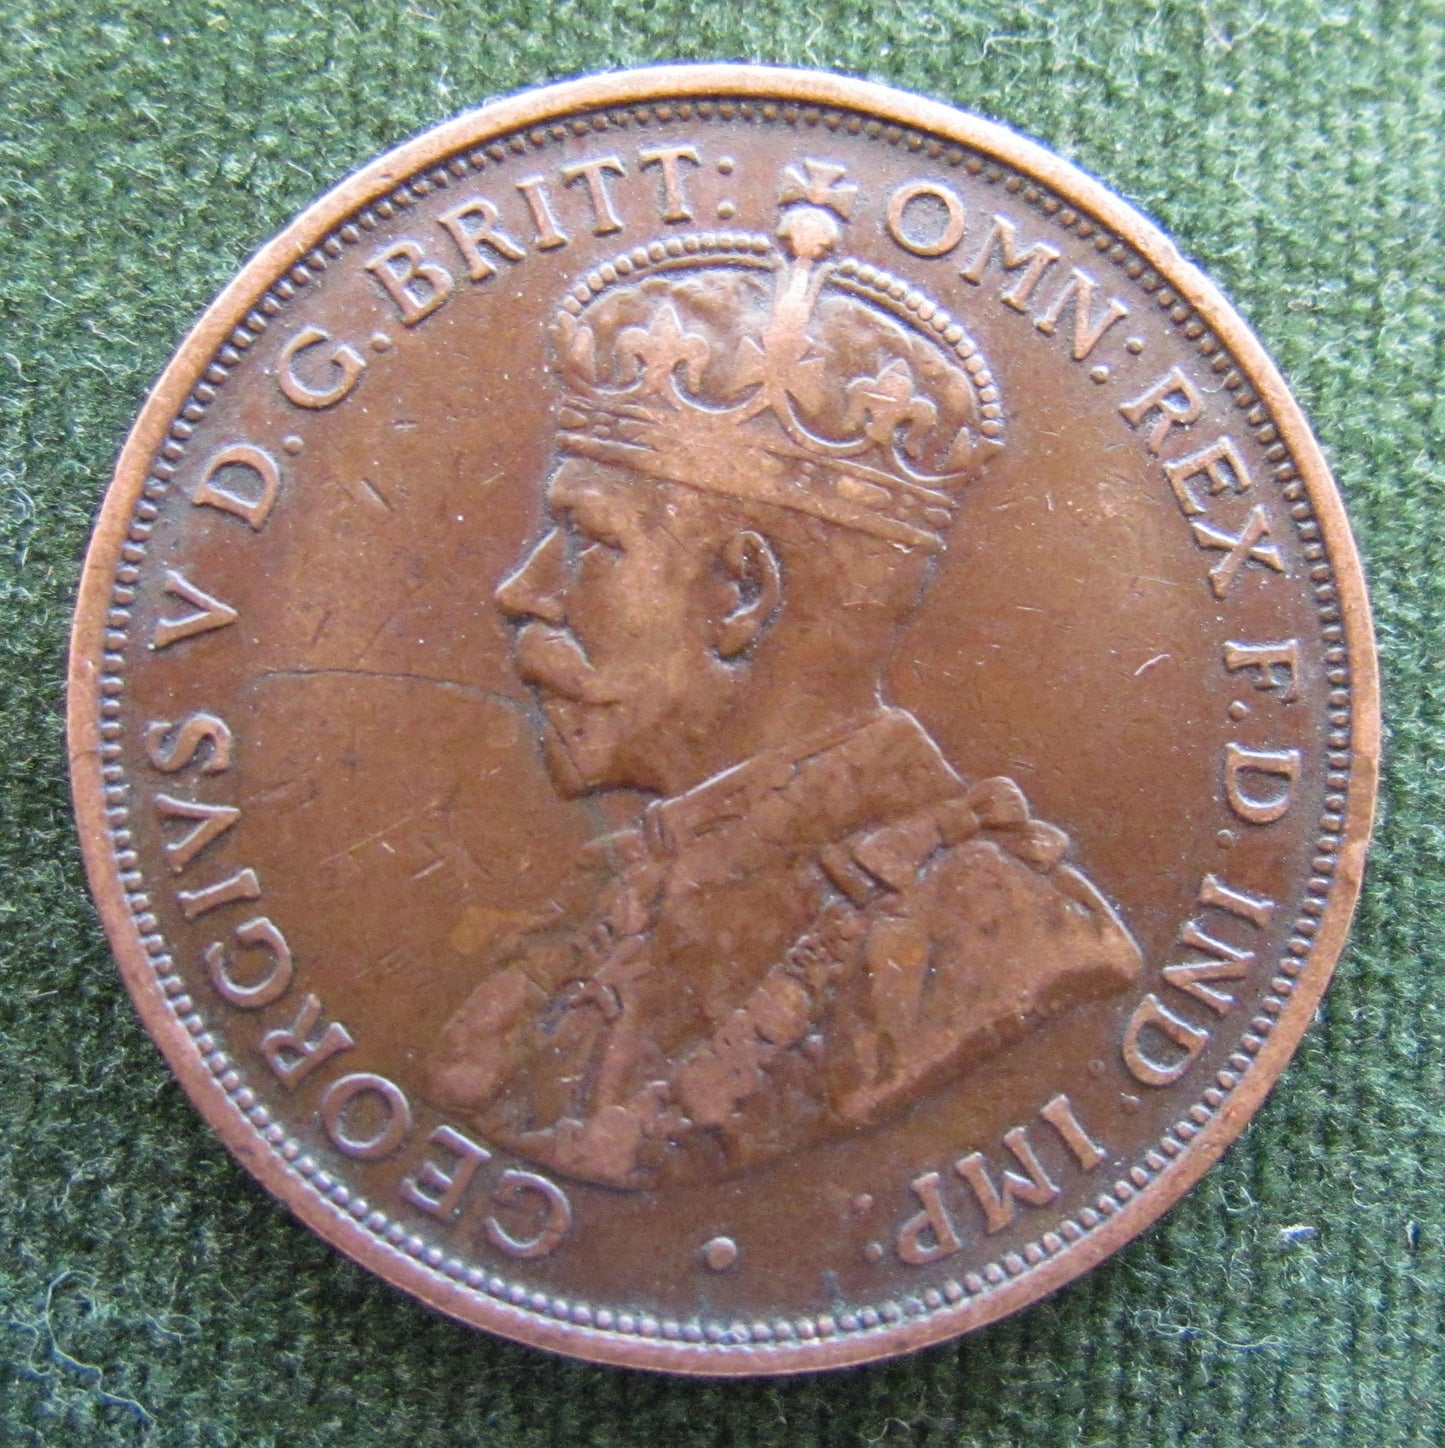 Australian 1912 1d 1 Penny King George V Coin - Variety Die Crack